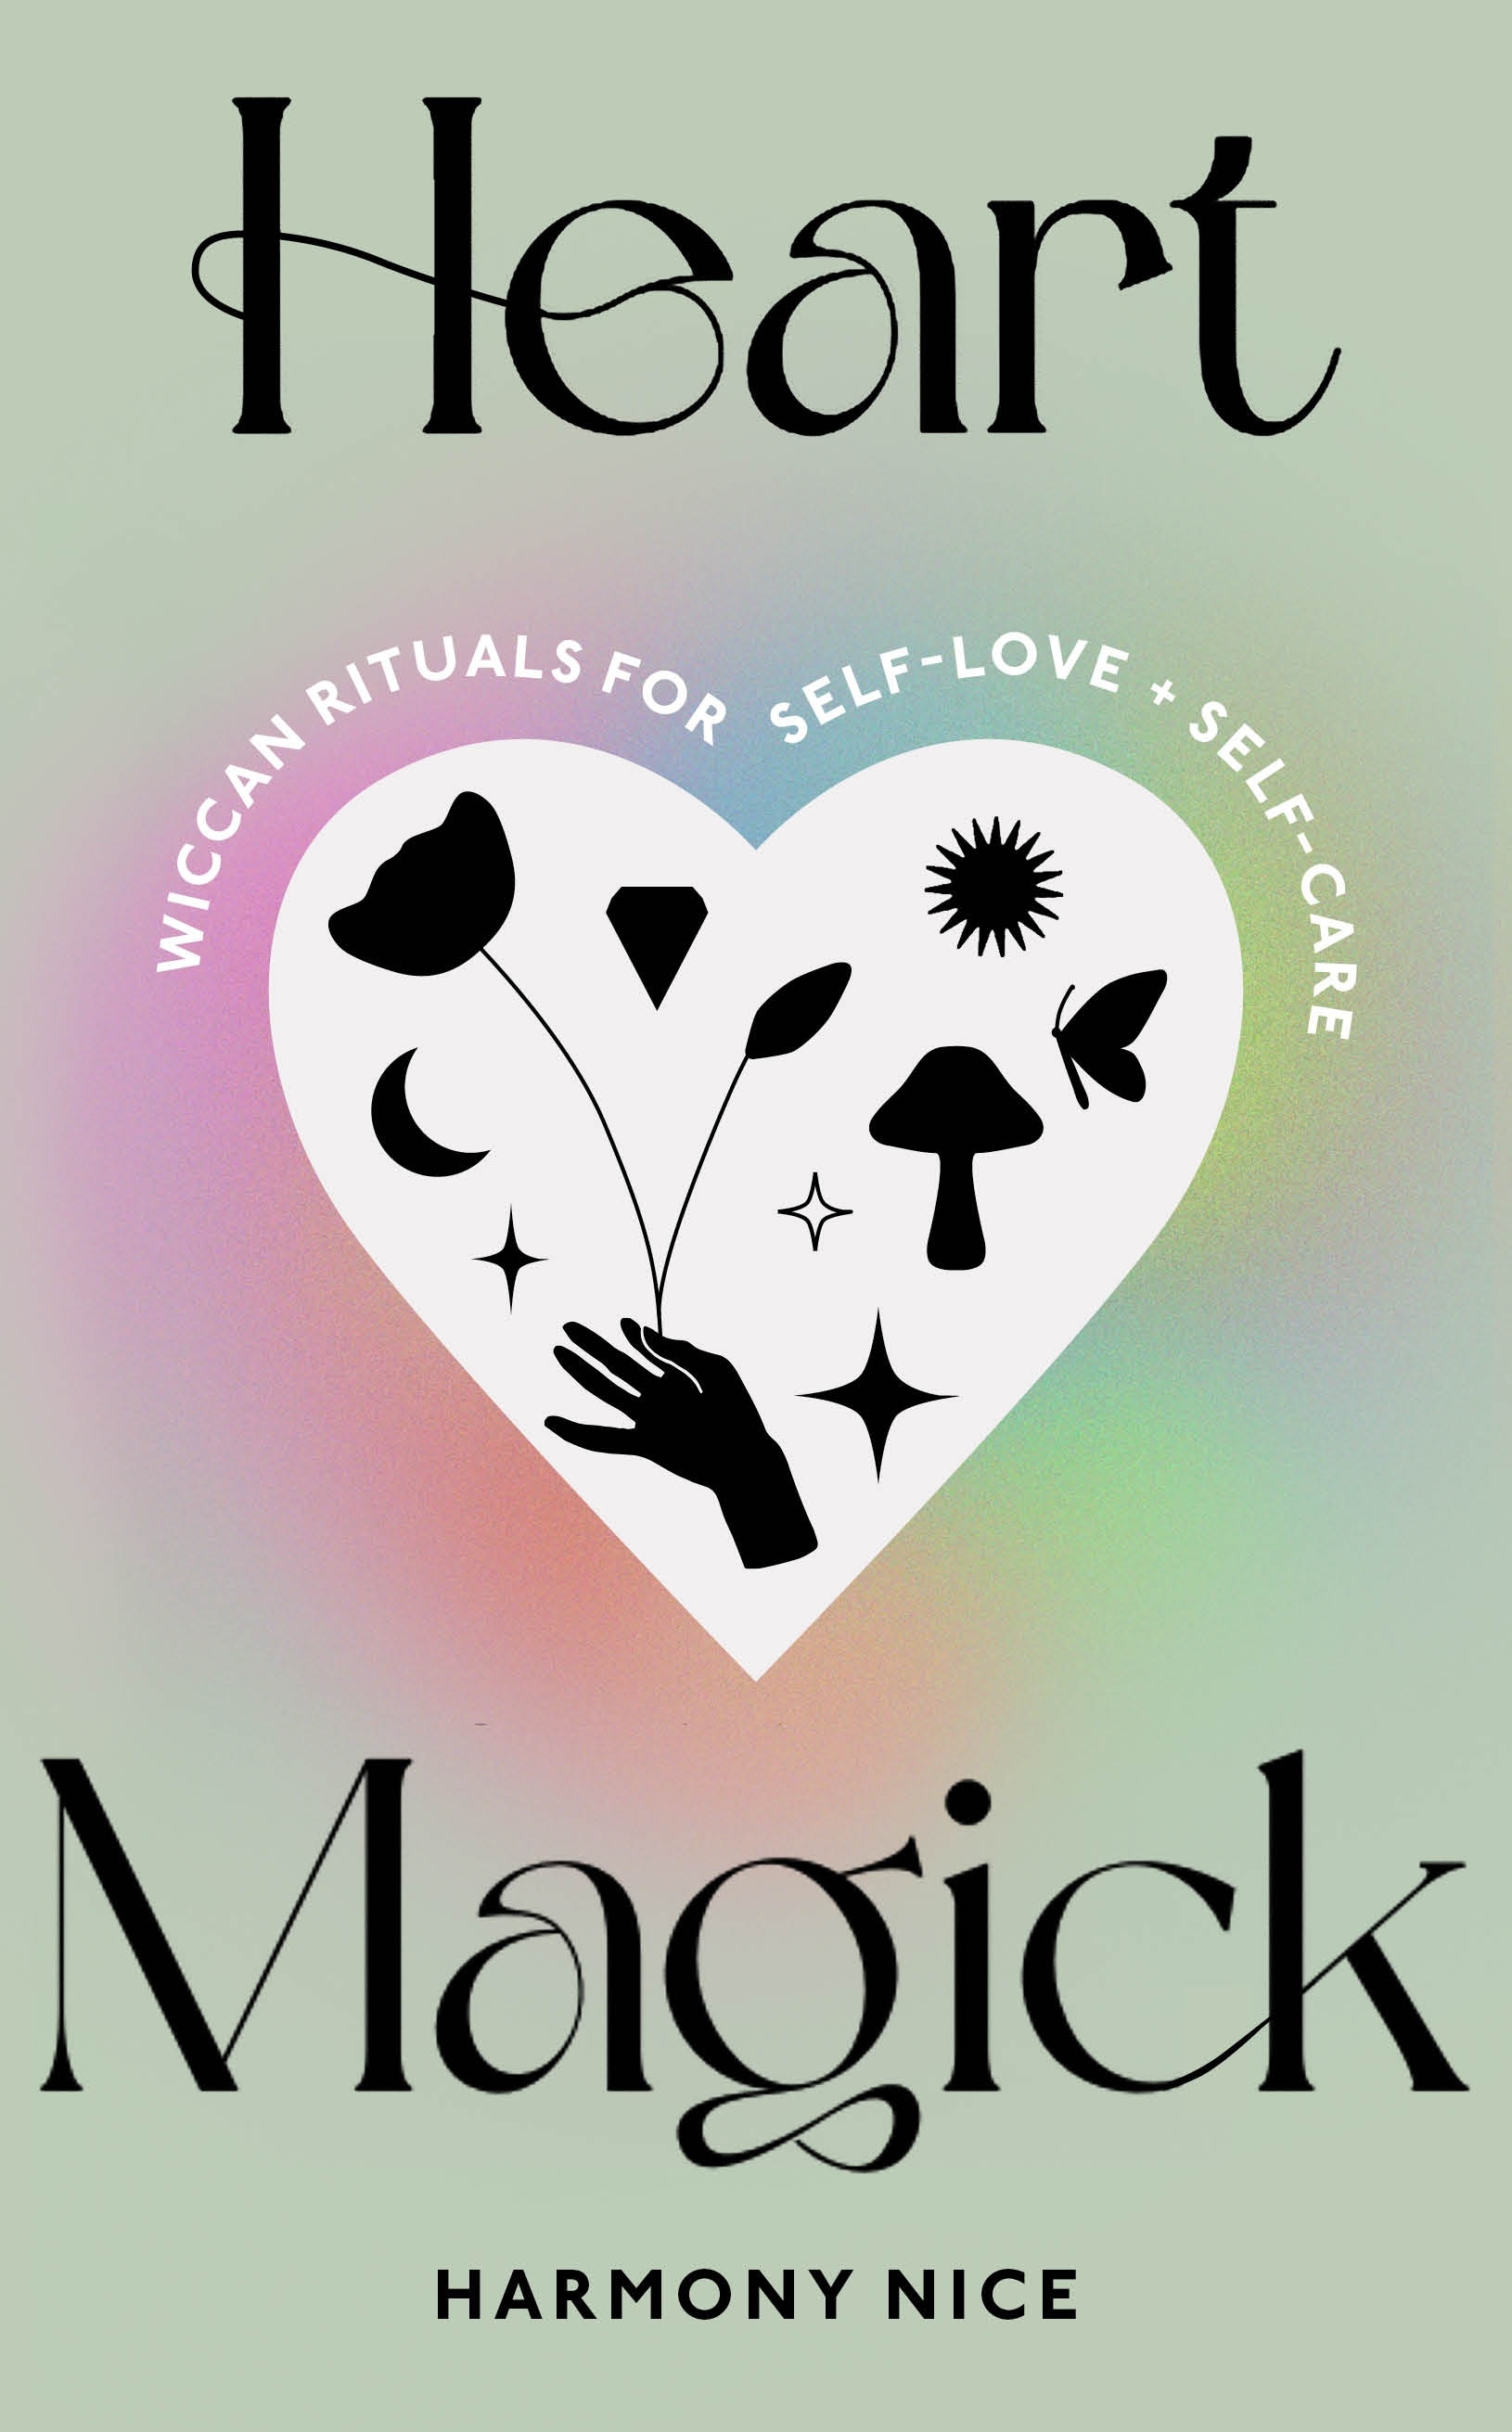 Book “Heart Magick” by Harmony Nice — October 27, 2022